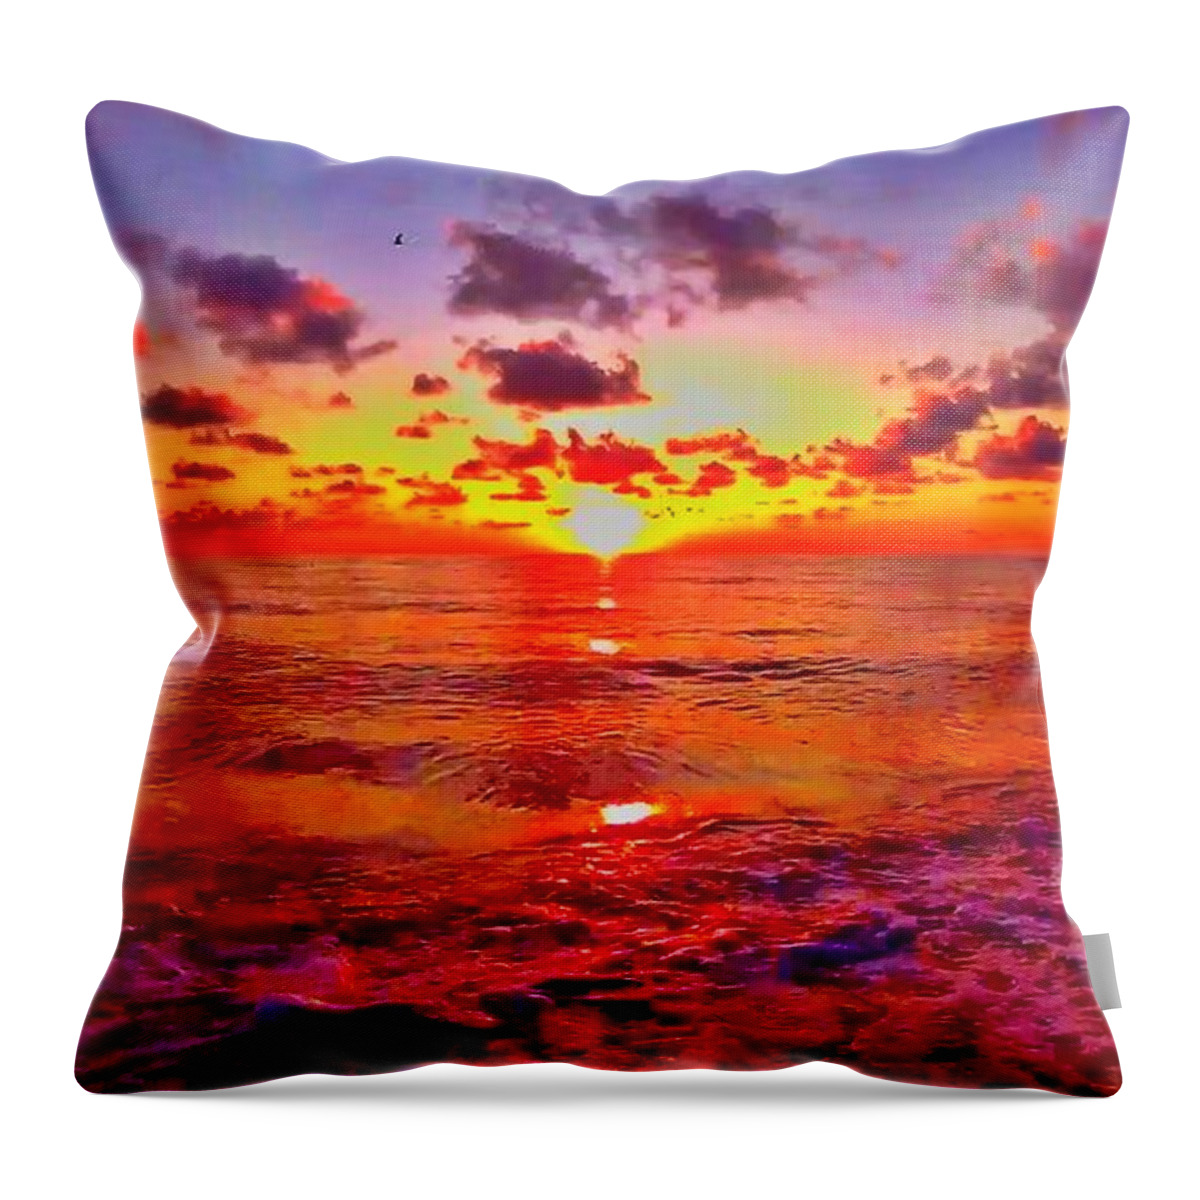 Sunrise Throw Pillow featuring the photograph Sunrise Beach 1049 by Rip Read